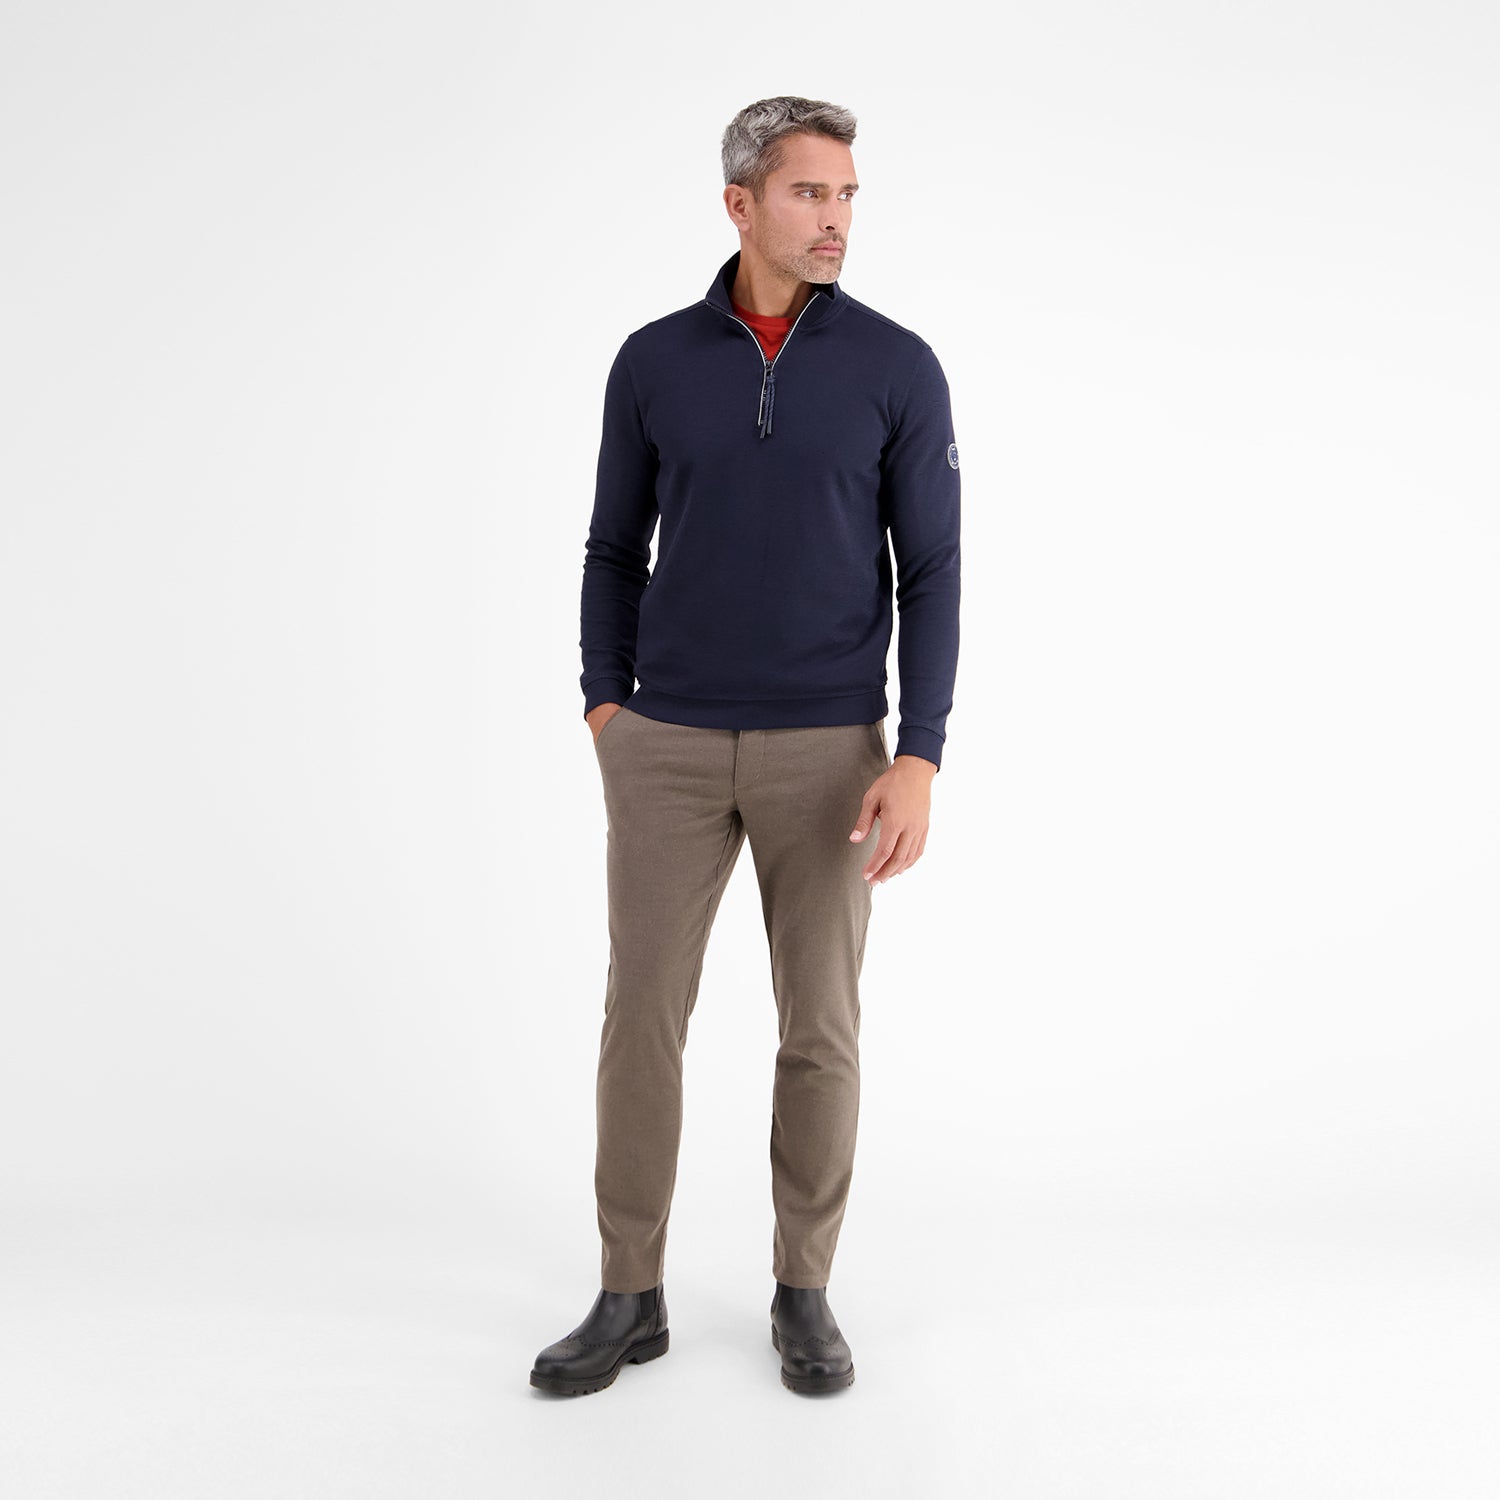 Lerros, Navy Classic Sweater – Naboulsi Distinction